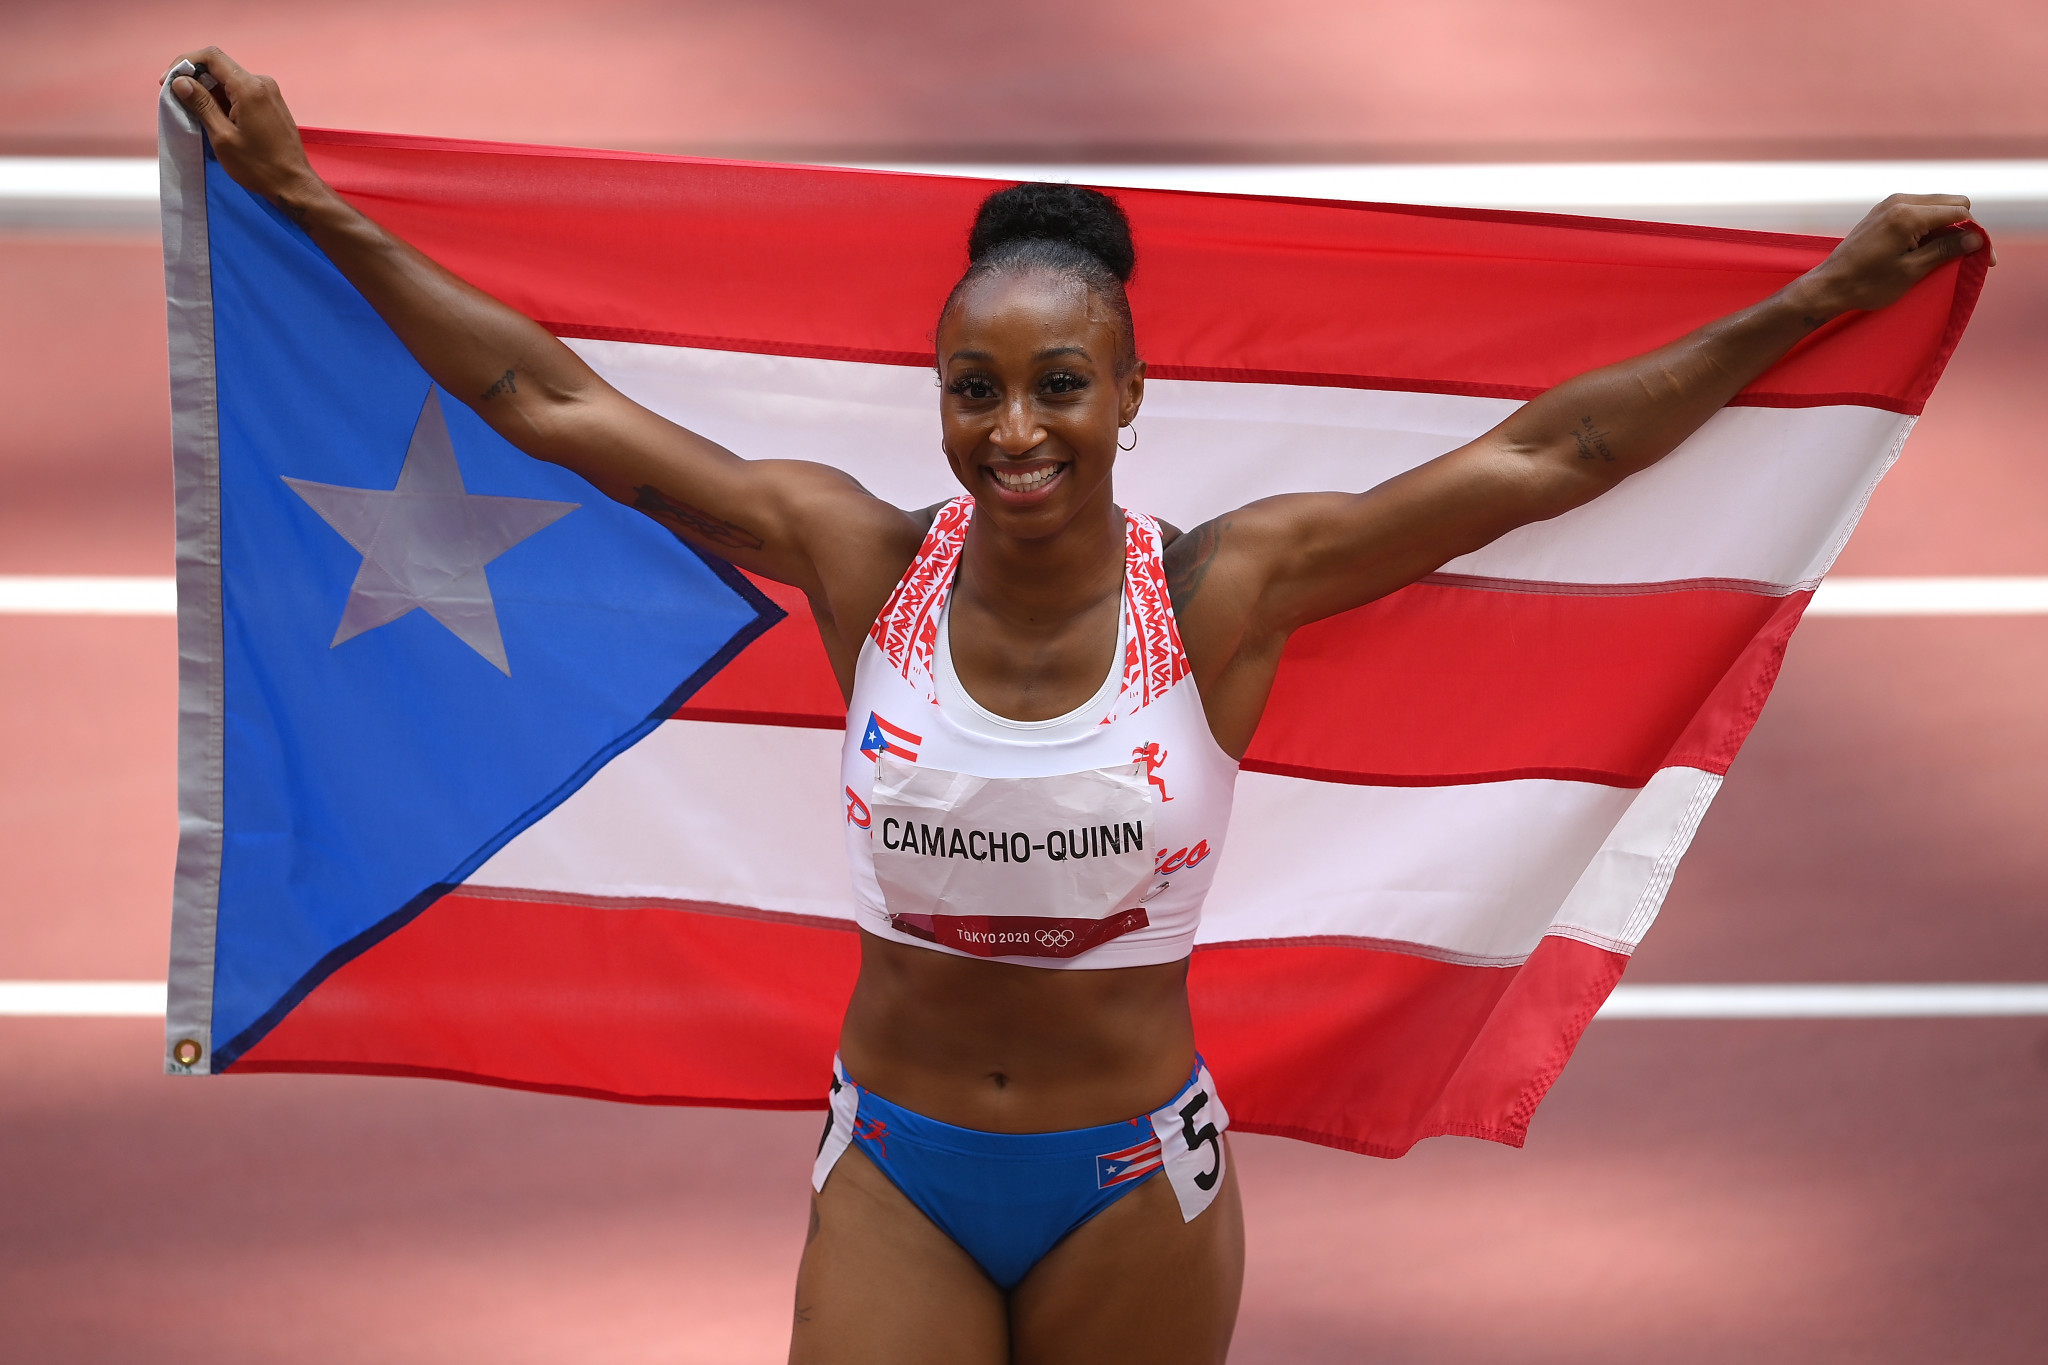 Puerto Rico sports secretary pleased with return at Tokyo 2020 Olympics